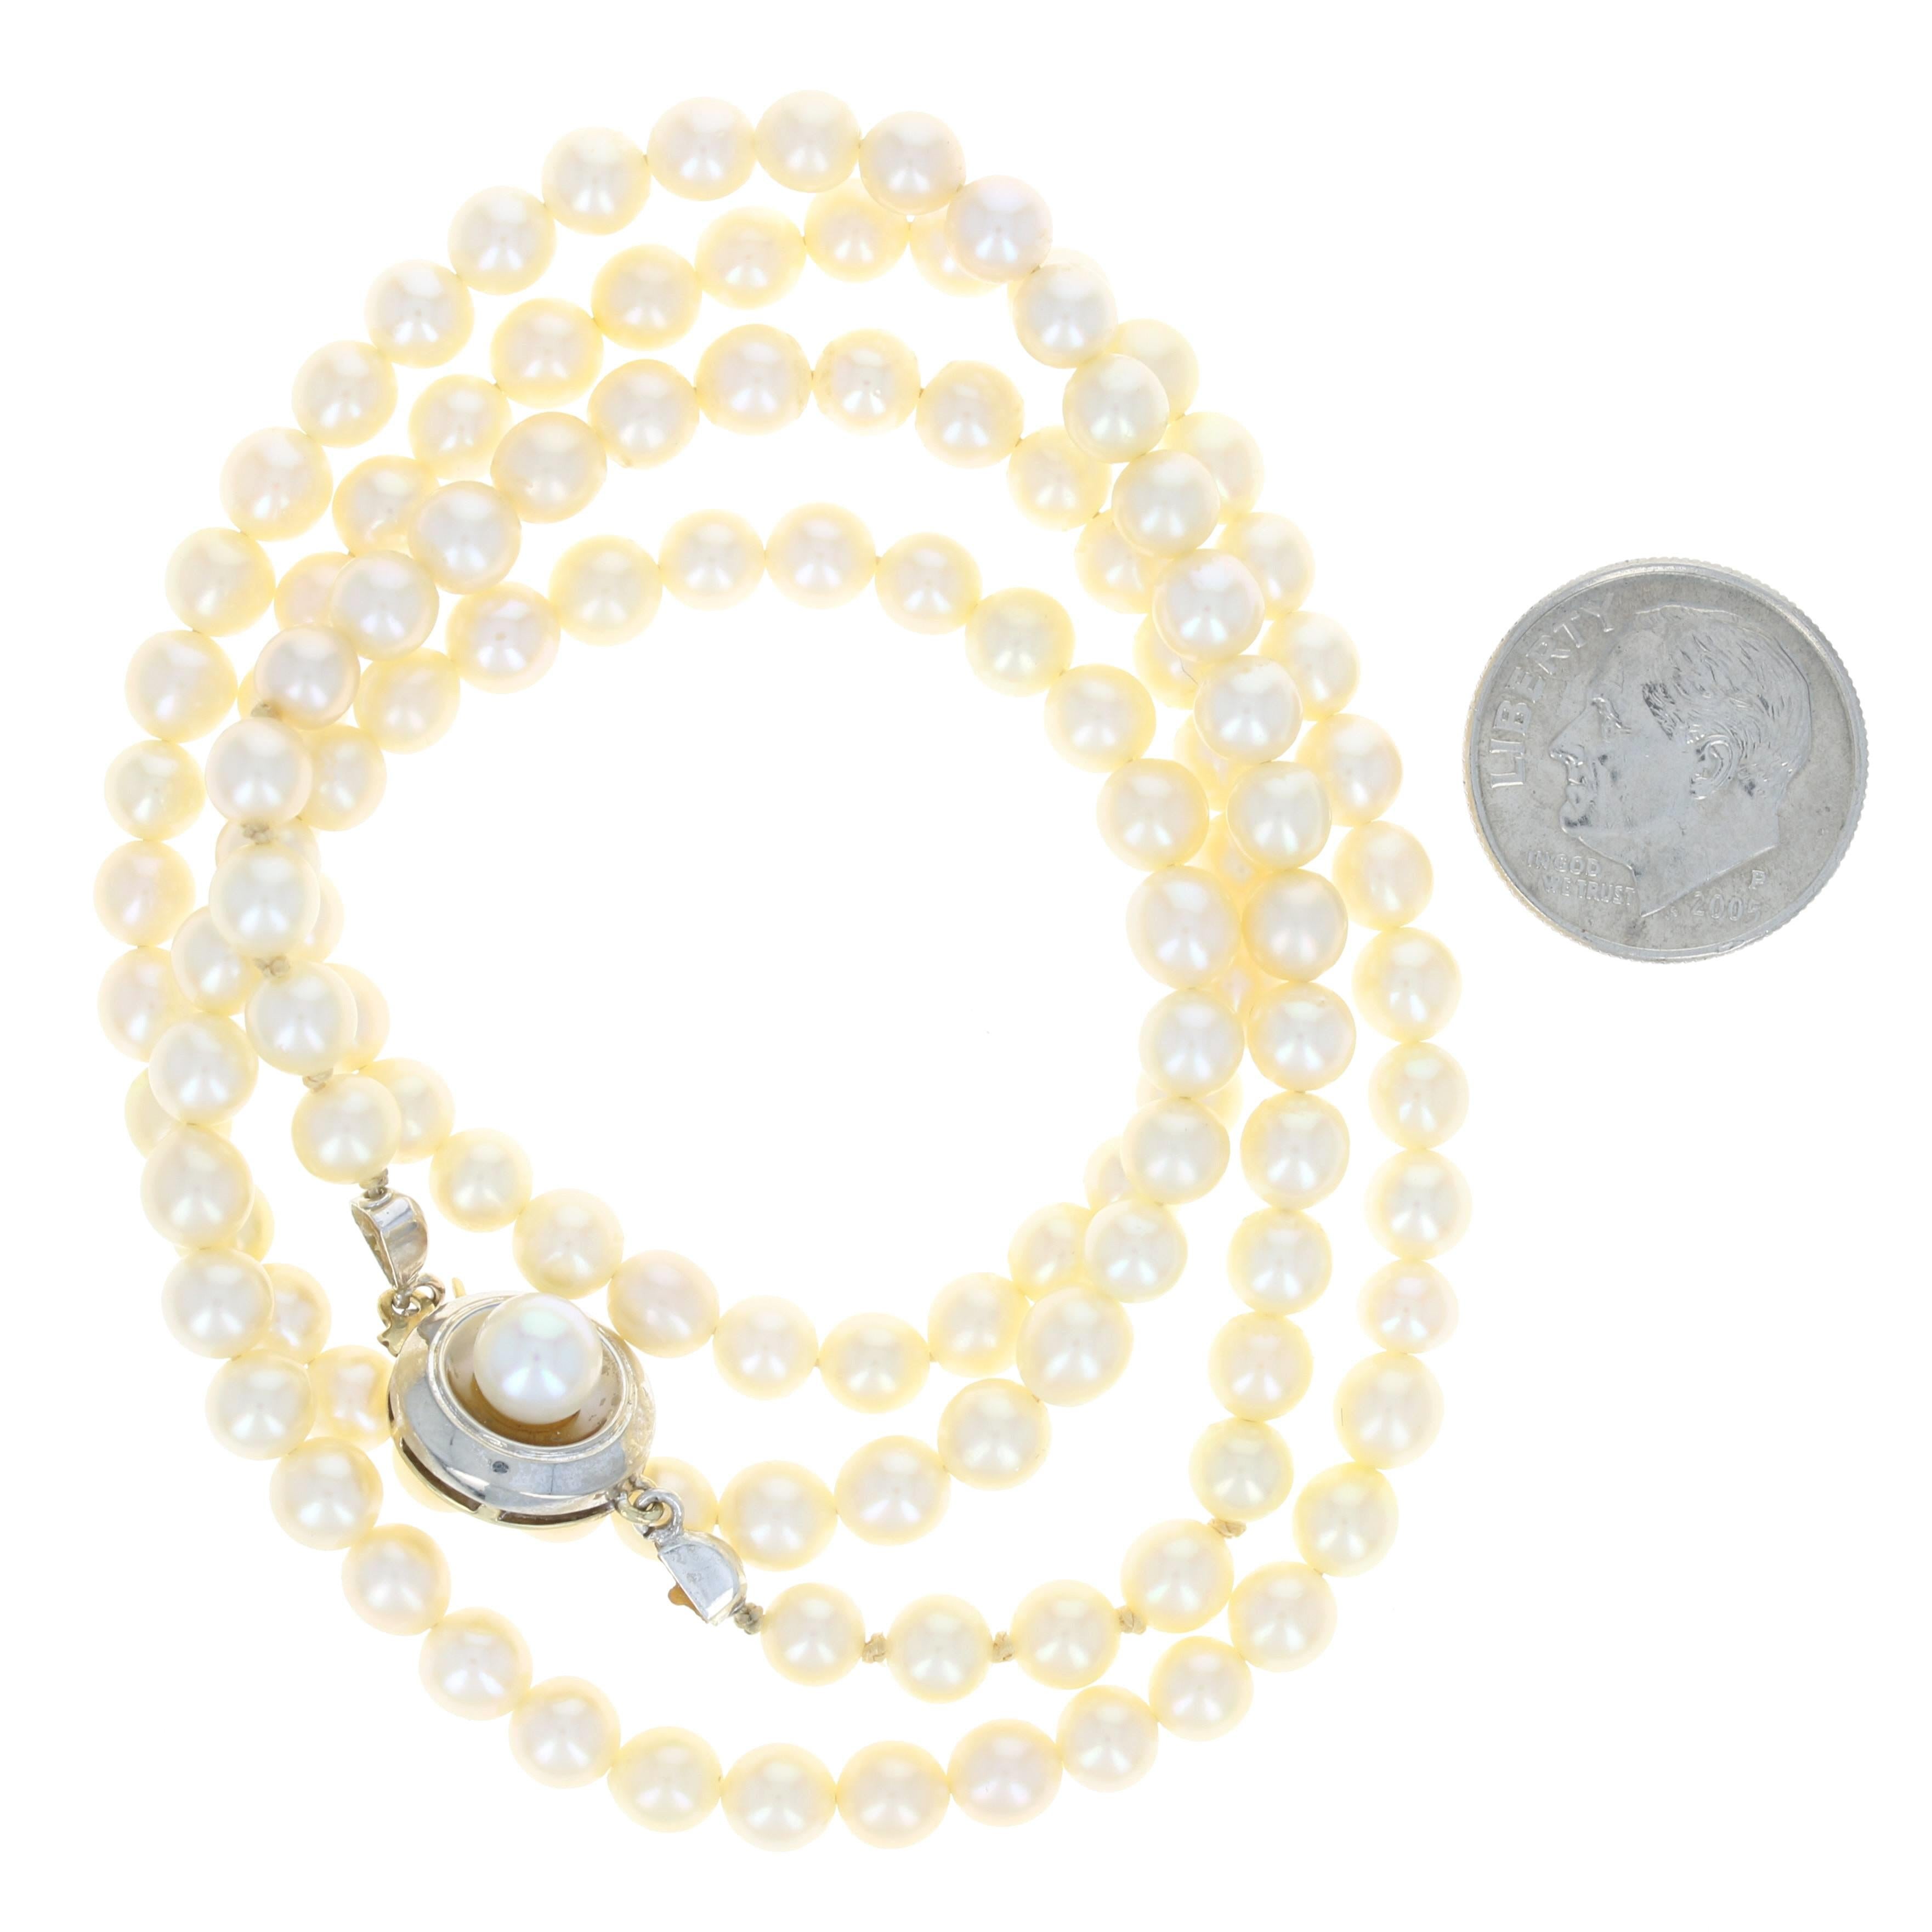 Perle Collier de perles de culture en or blanc, fermoir crochet de poisson 8 carats